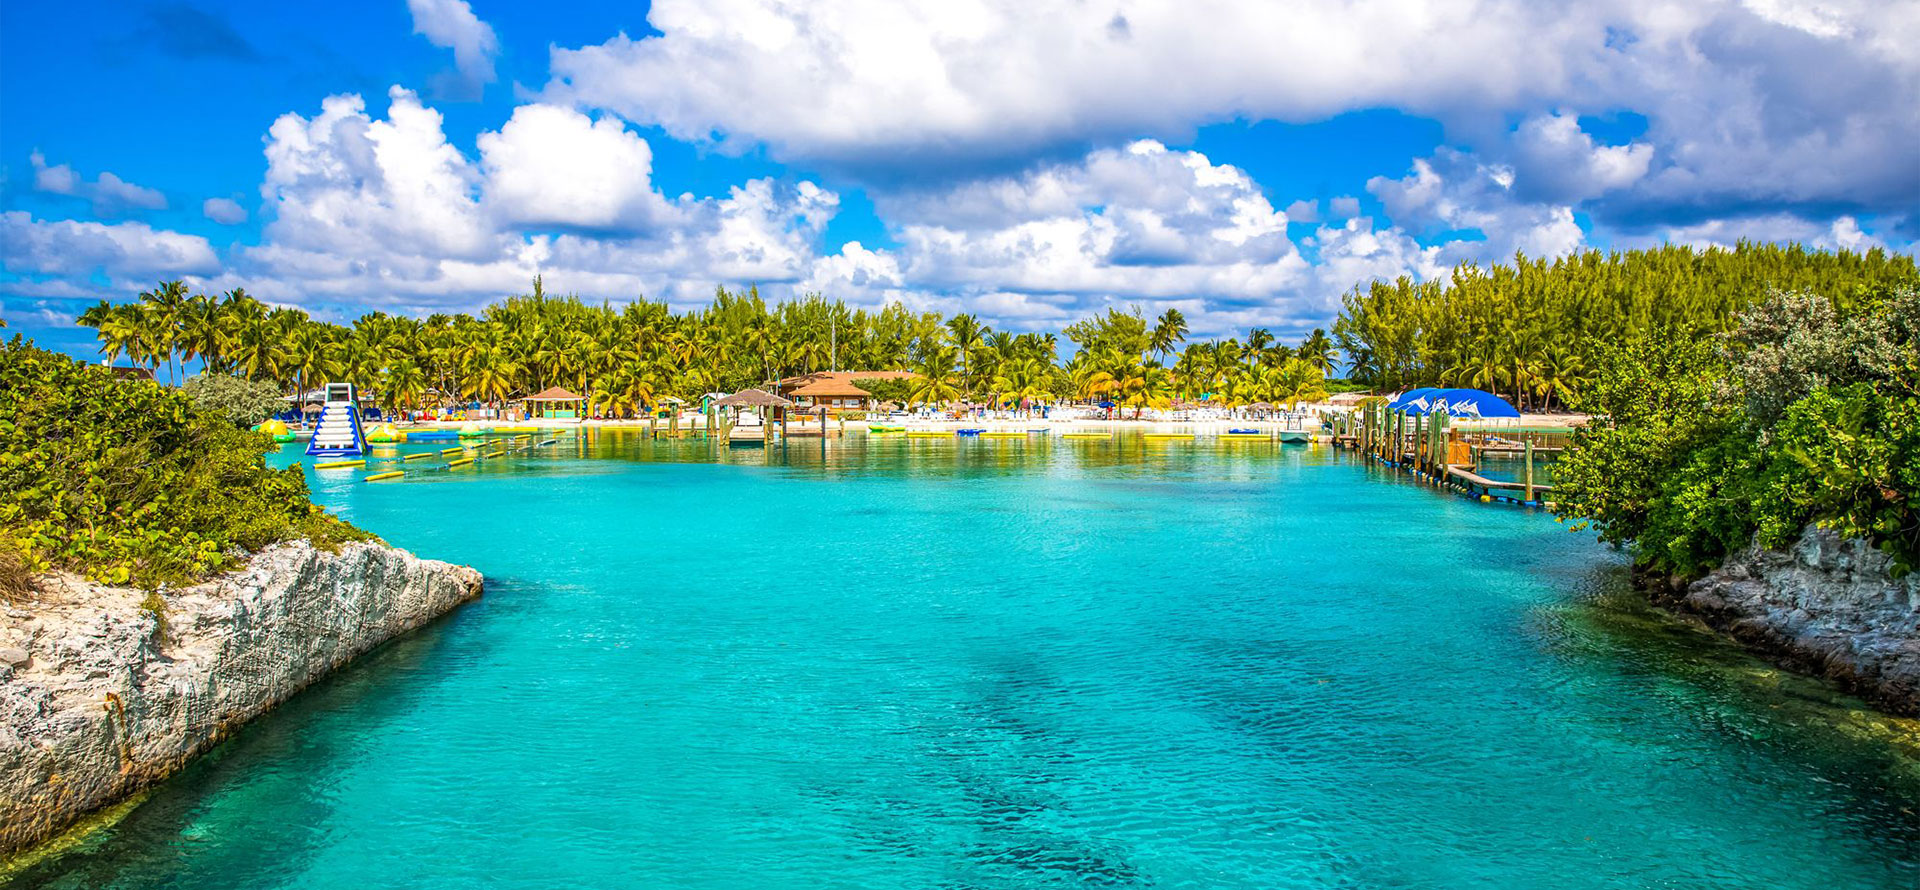 Bahamas vs cancun blue lagoon.